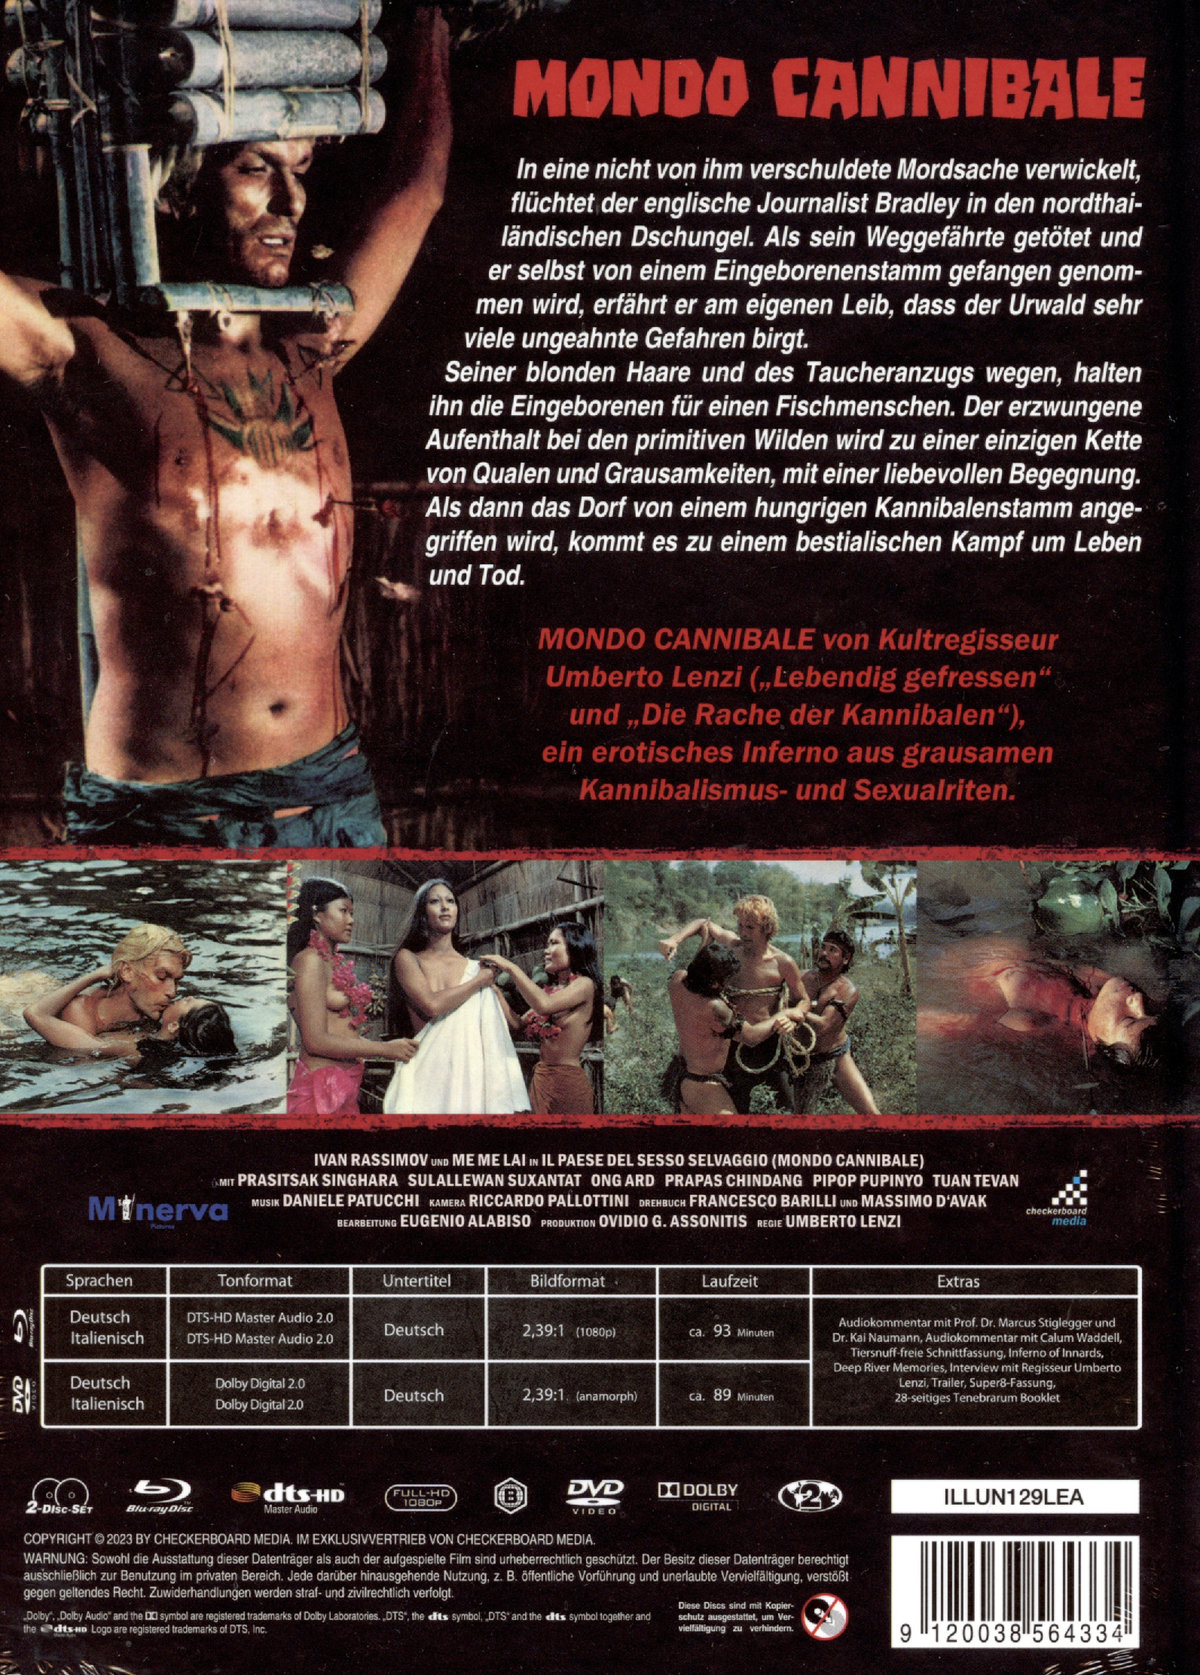 Mondo Cannibale - Uncut Mediabook Edition  (DVD+blu-ray) (A) (Illusions)